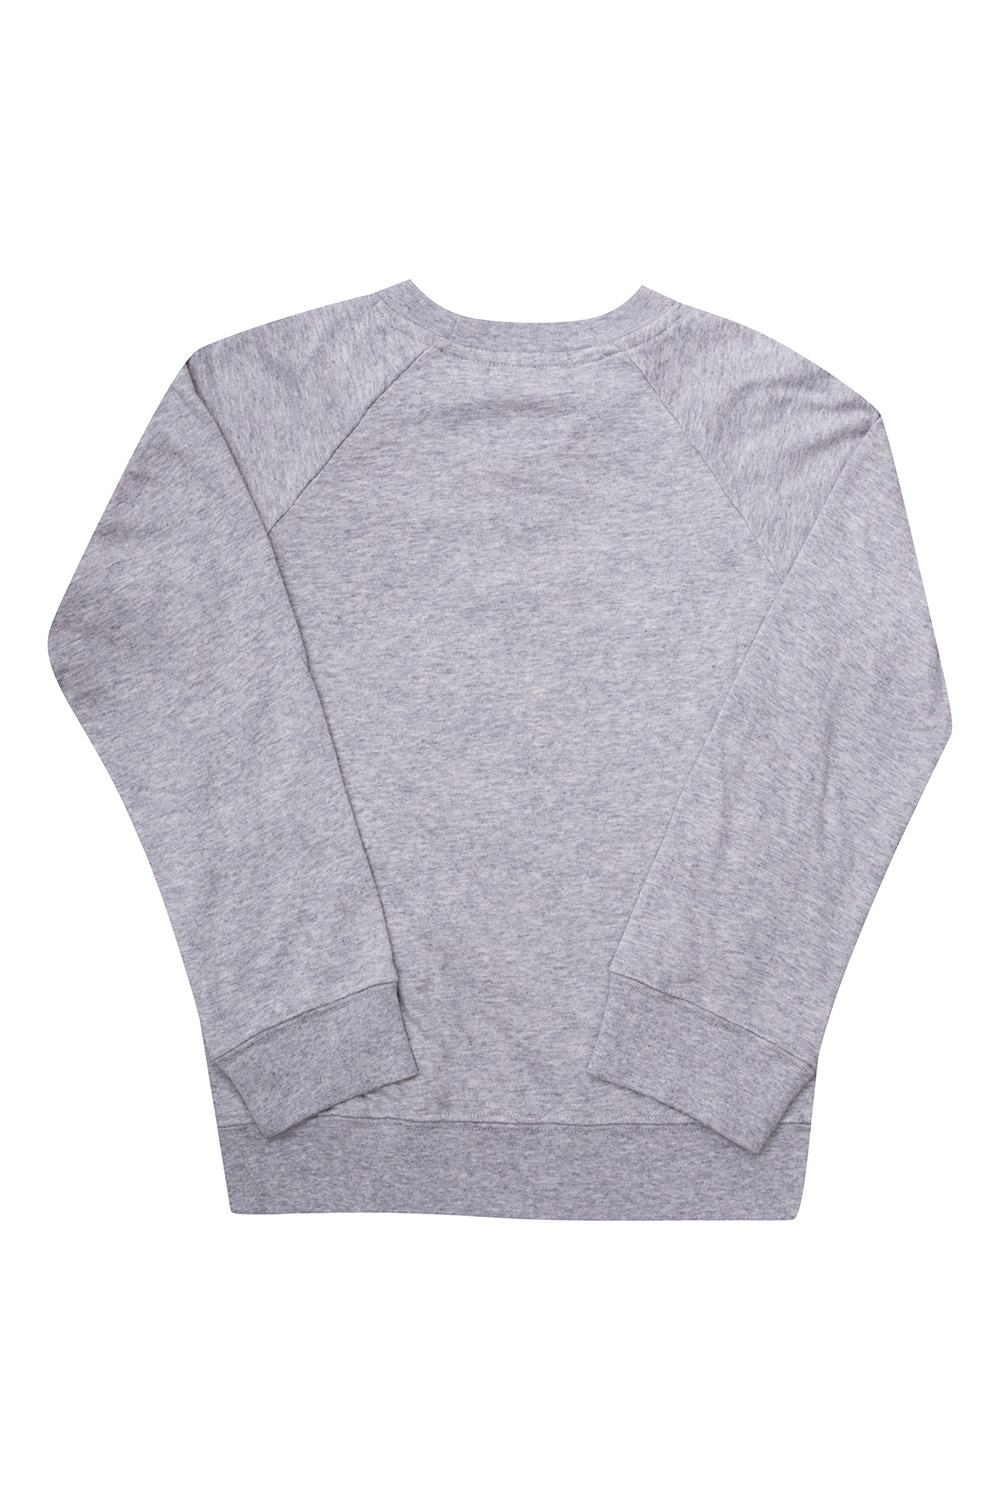 Men's Shirt Tommy Hilfiger Slim Plain 100% cotton collar Italian Long sleeve